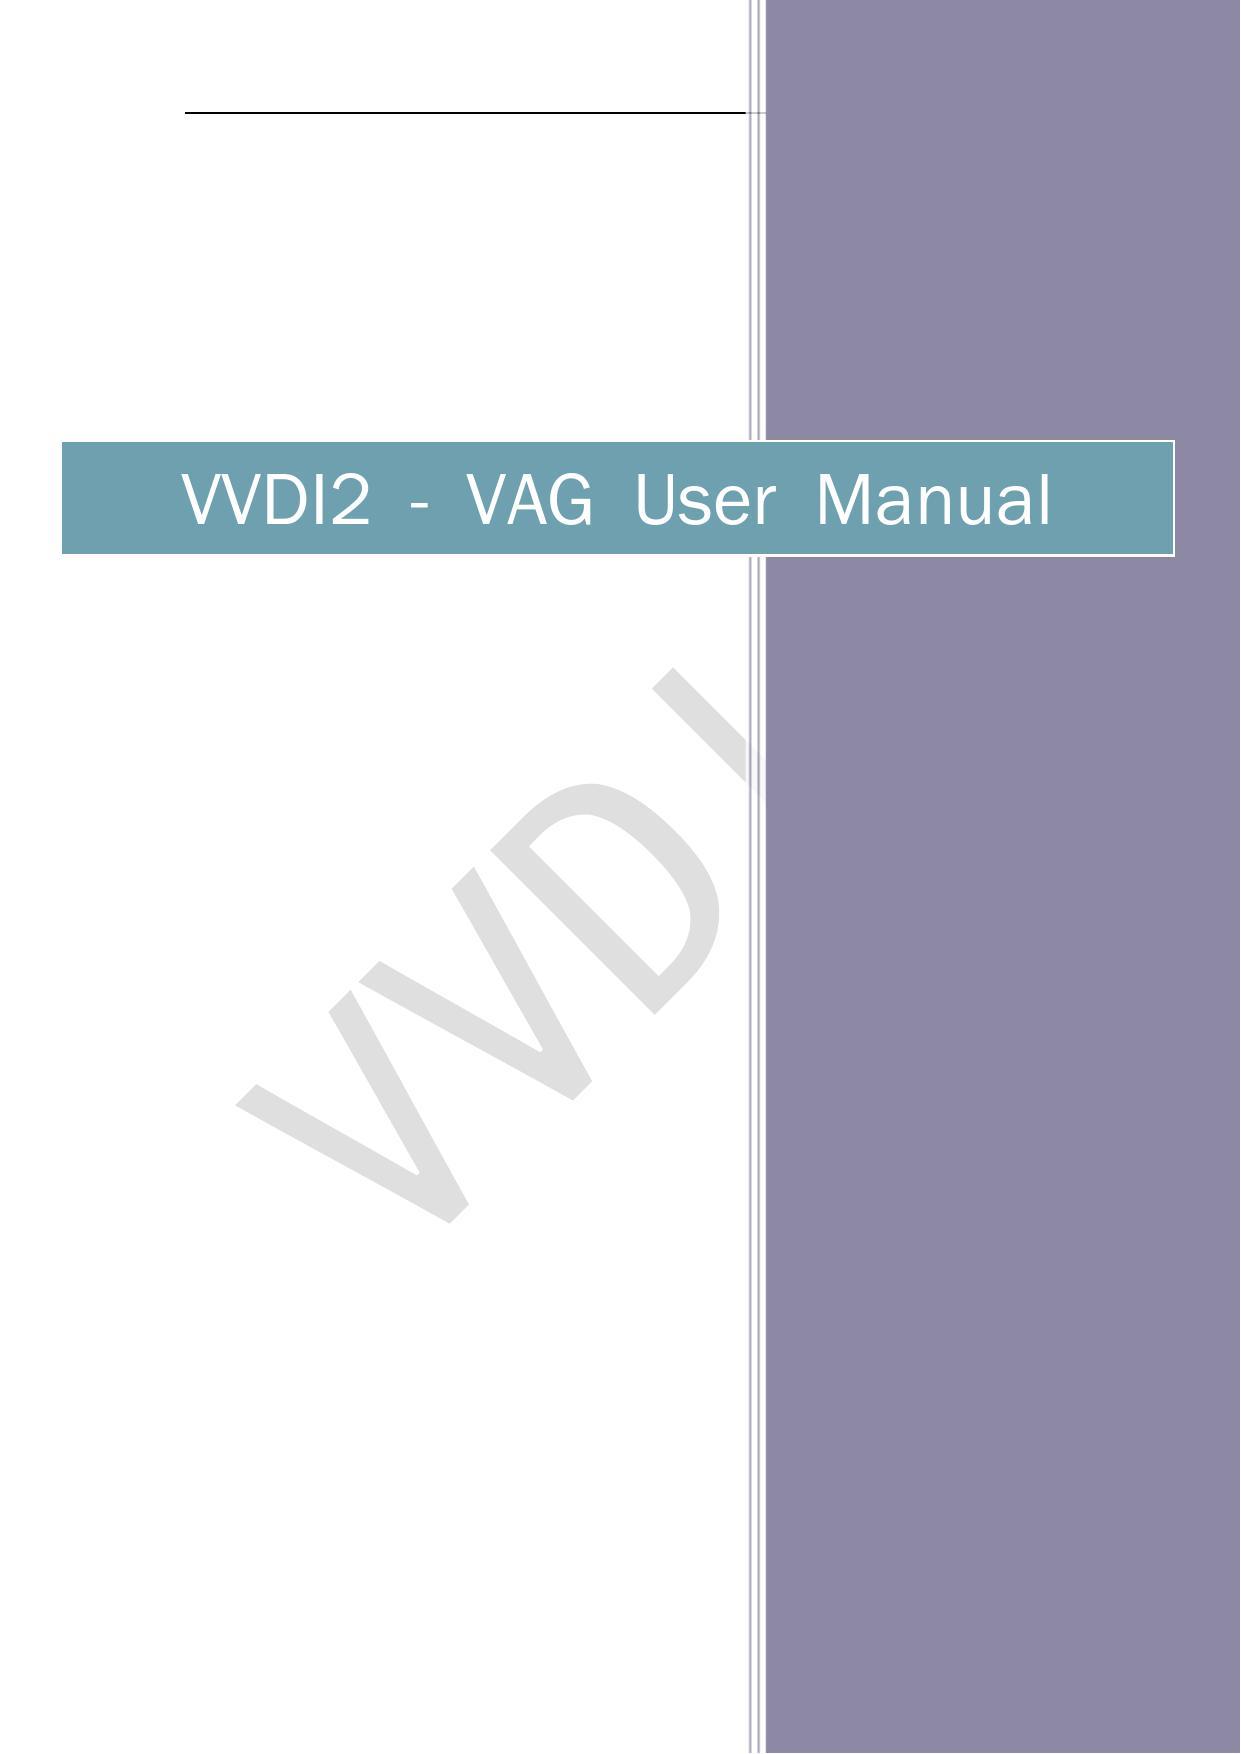 vvdi2-vag-user-manual.pdf